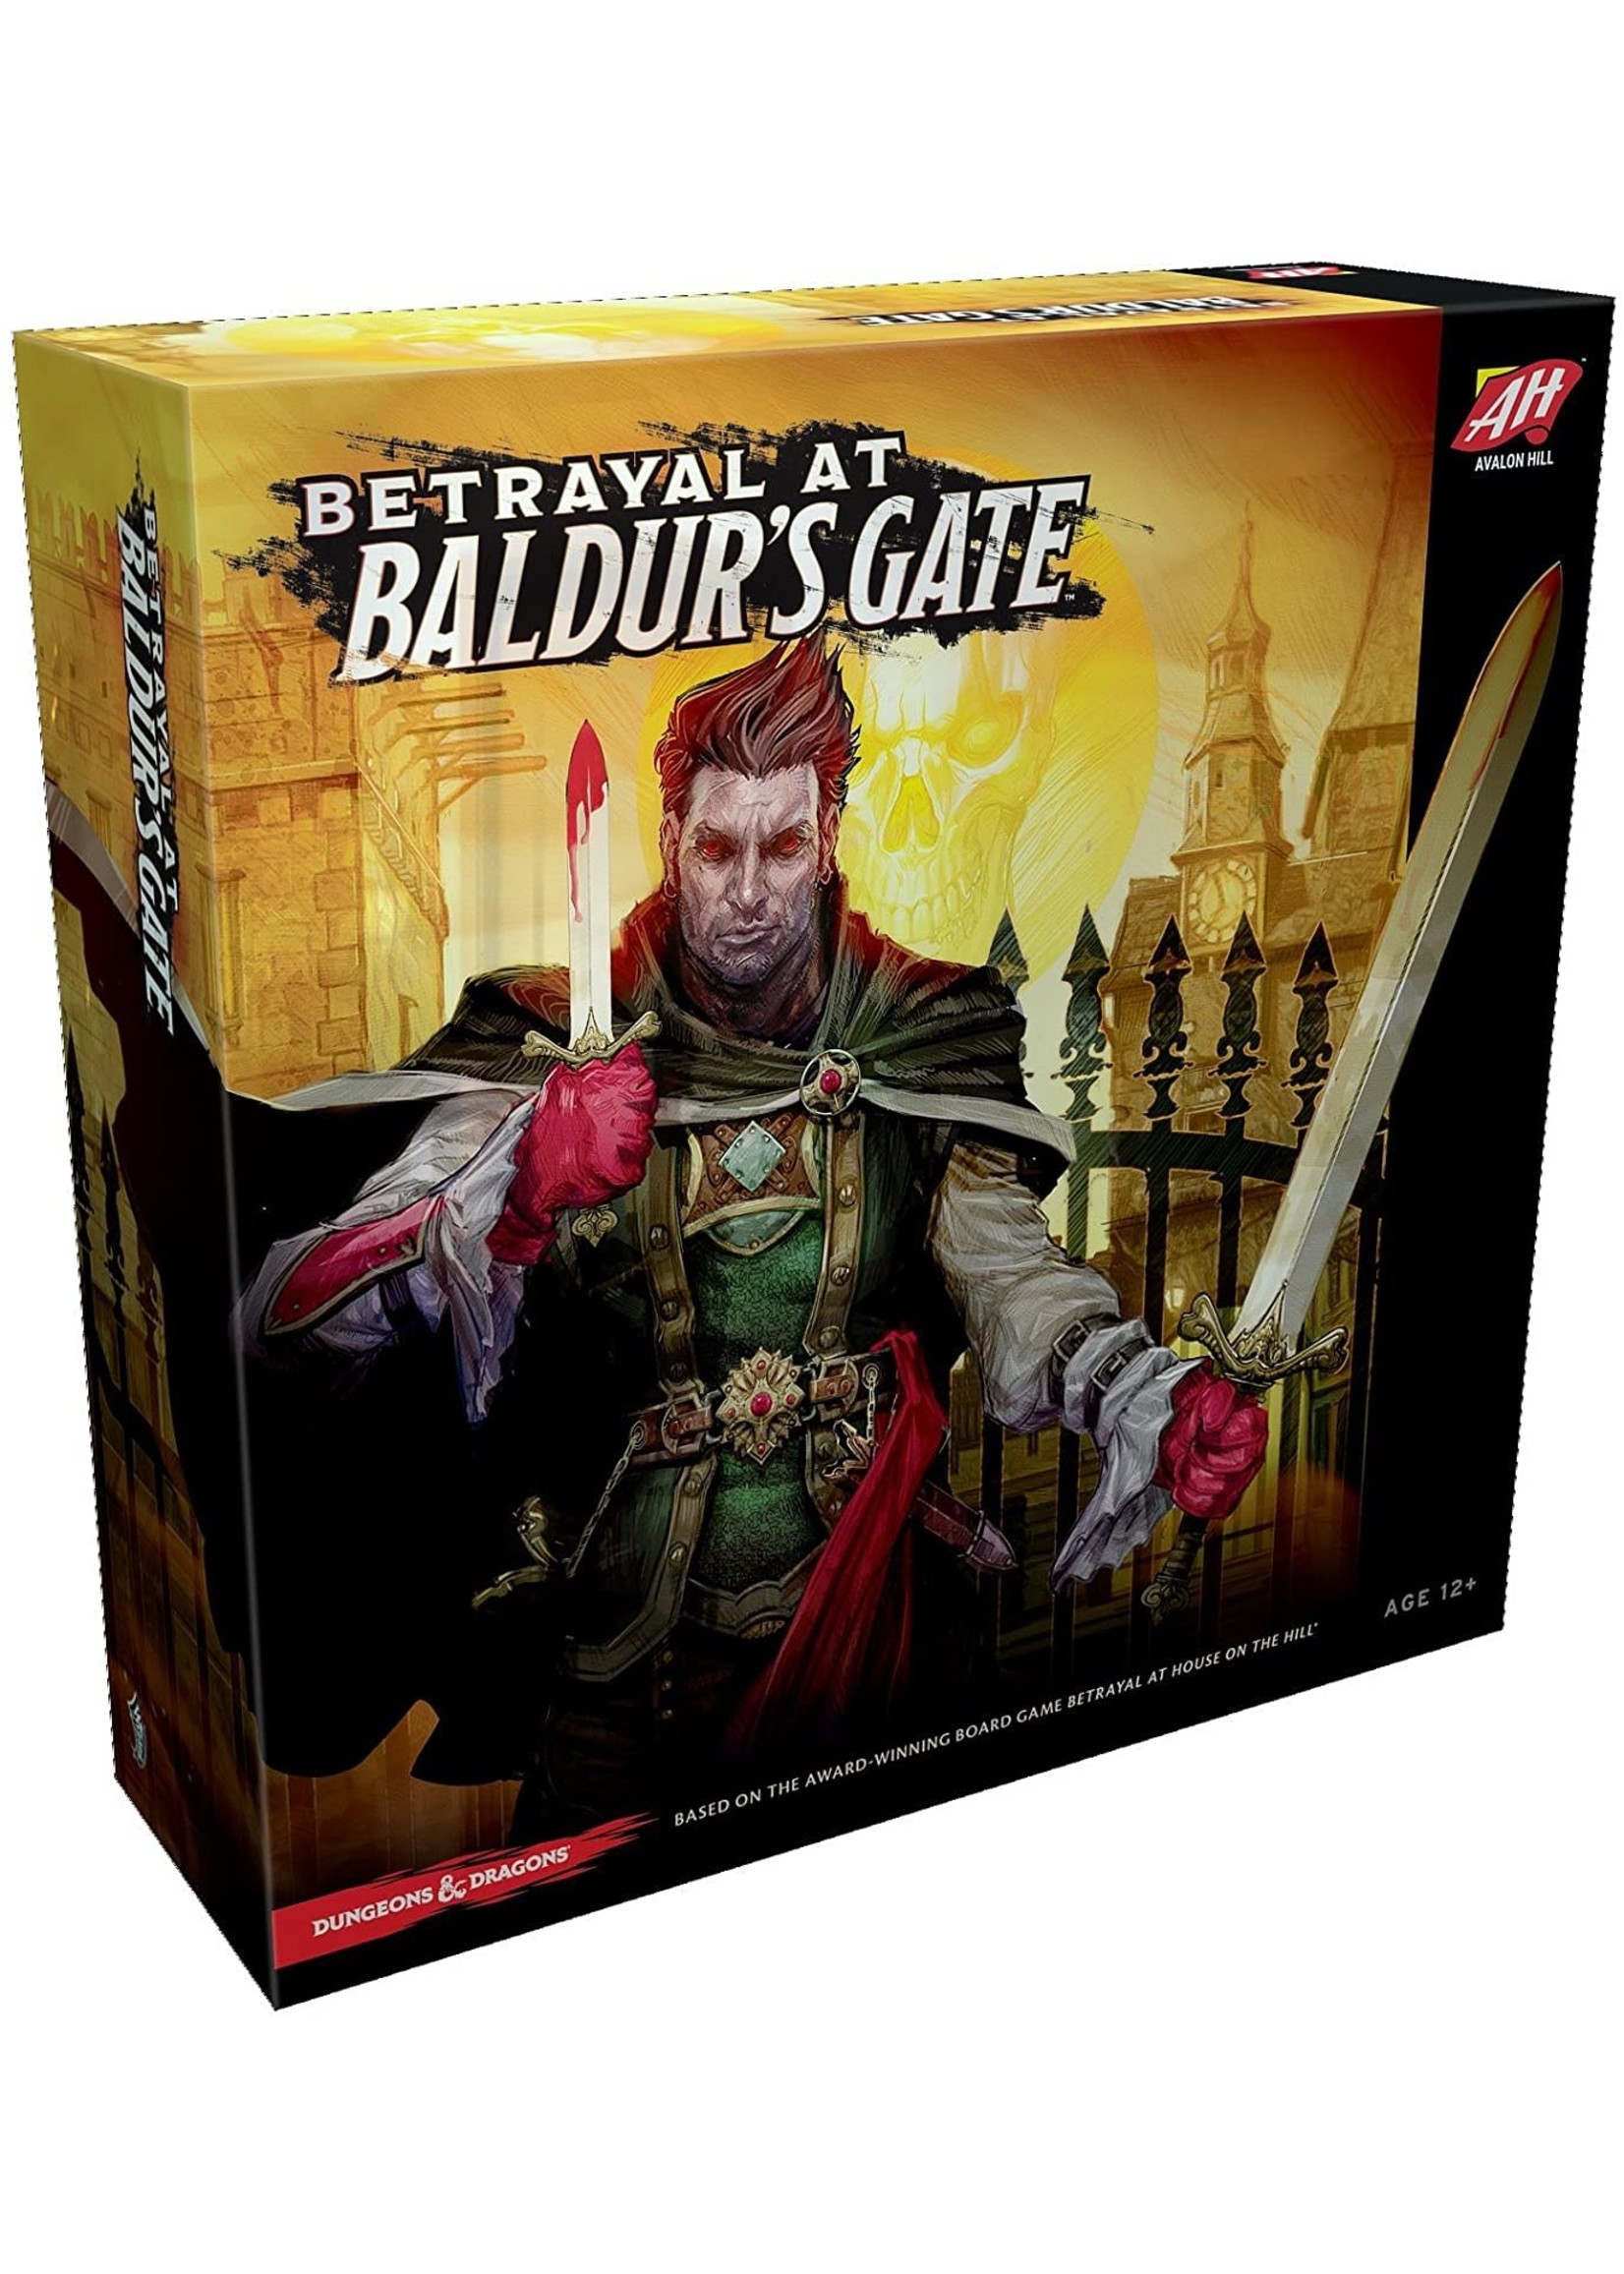 RENTAL - Betrayal at Baldur's Gate 2 Lb 15.7 oz